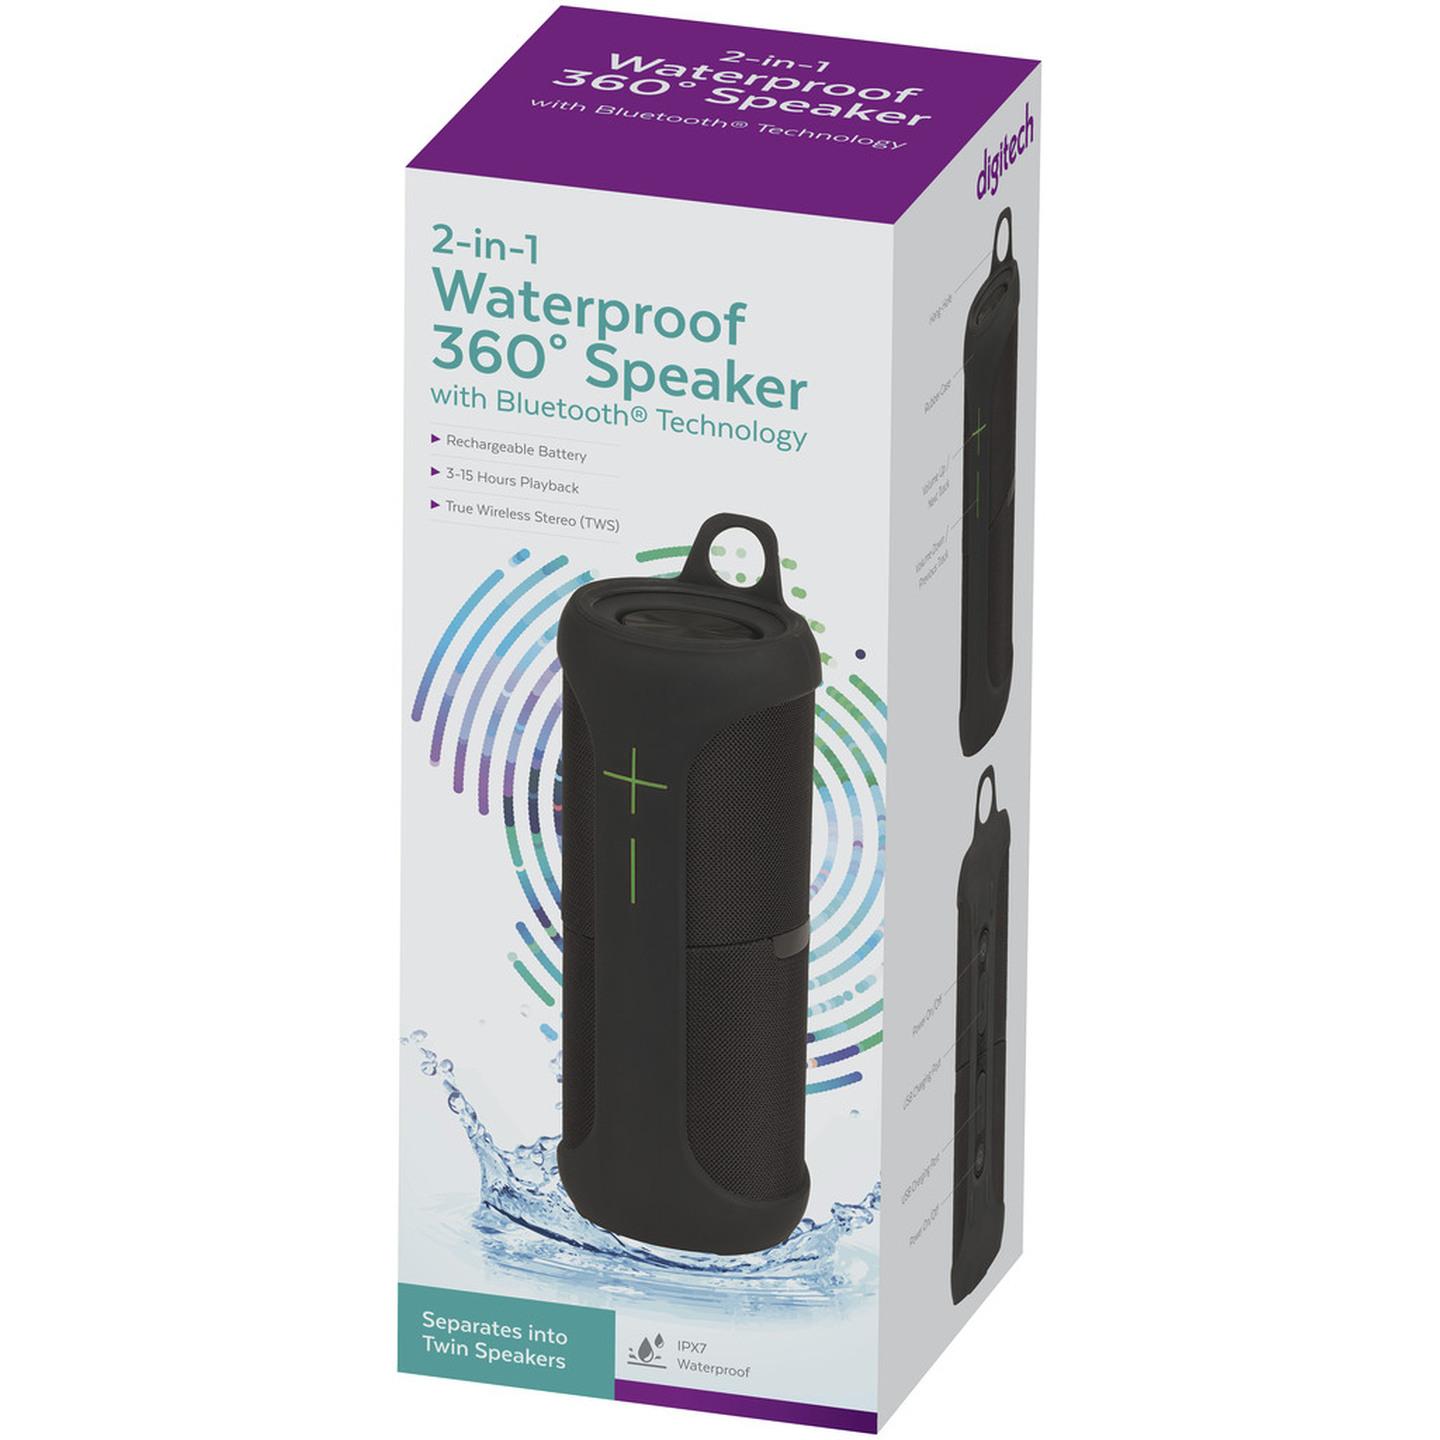 2-In-1 Waterproof 360 Speaker with Bluetooth Technology